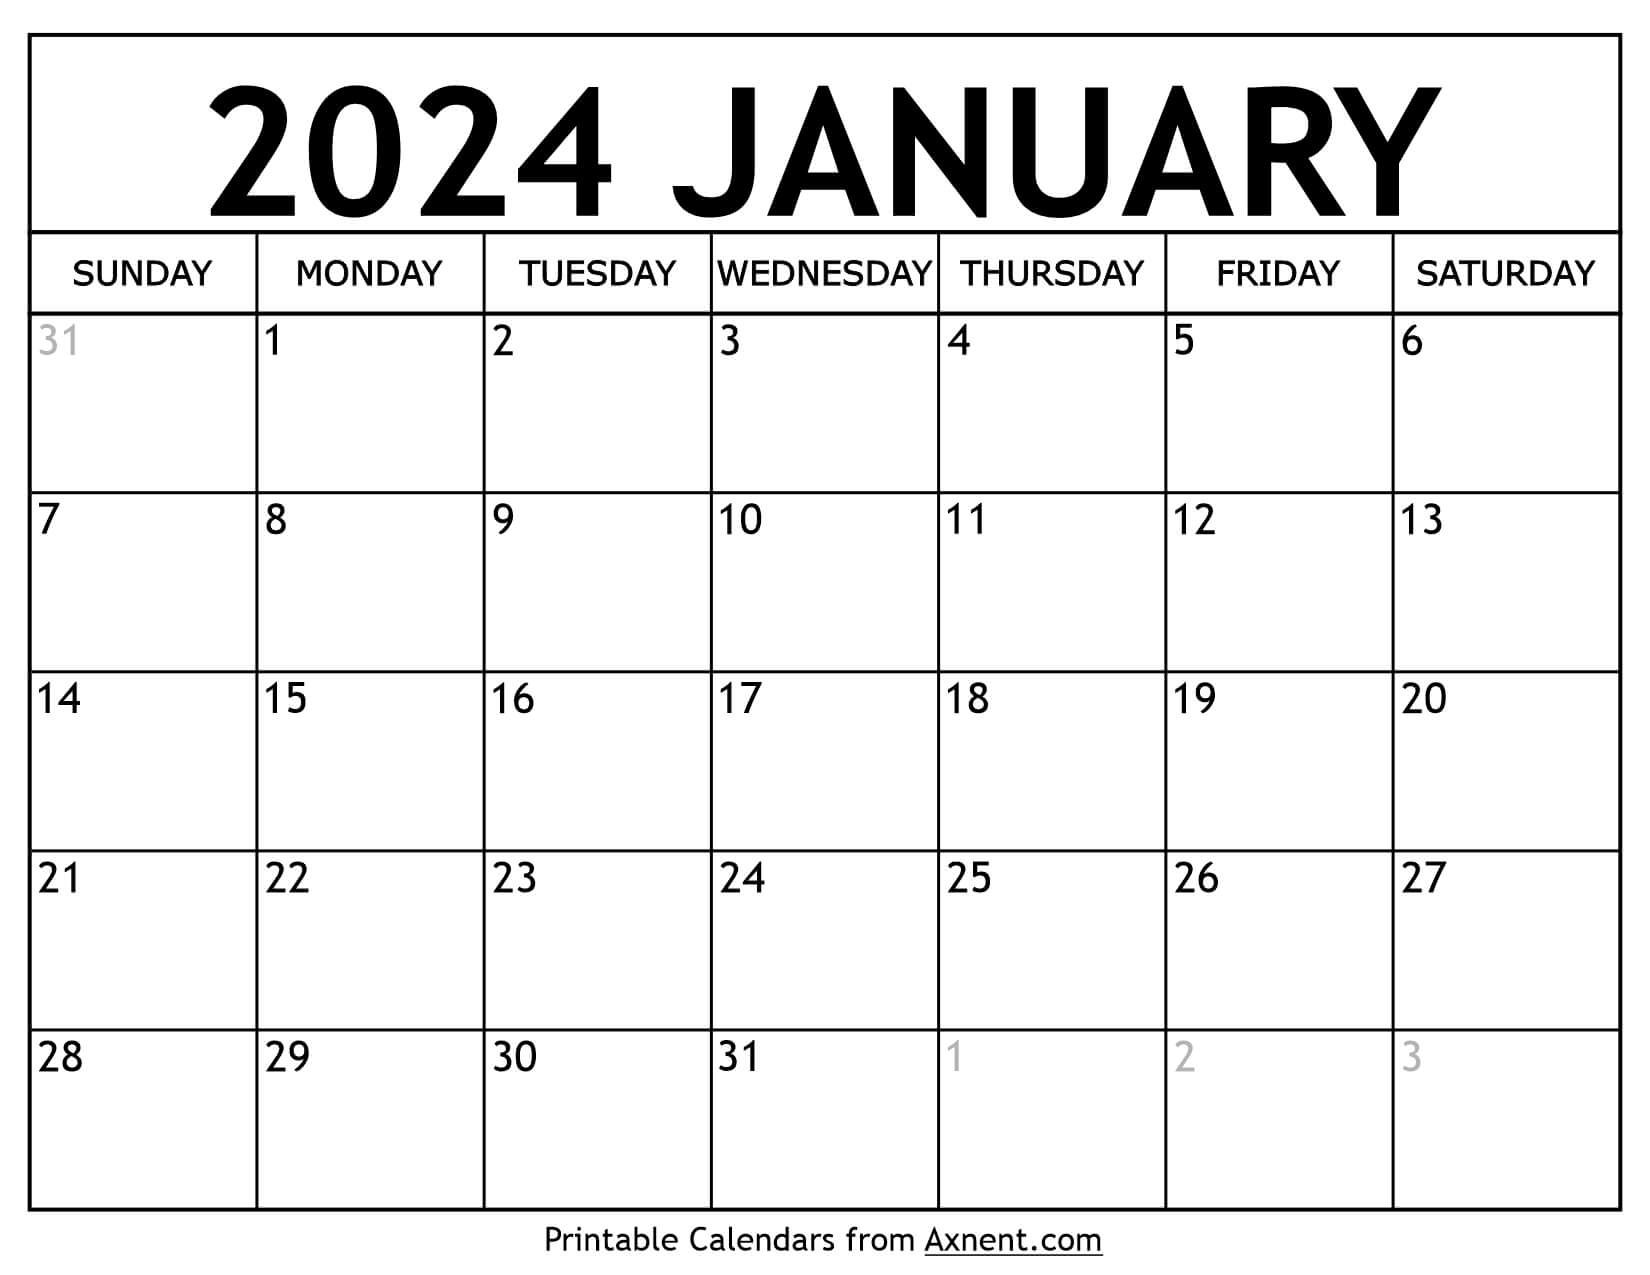 Printable January 2024 Calendar Template - Print Now for Calendar January 2024 Free Printable